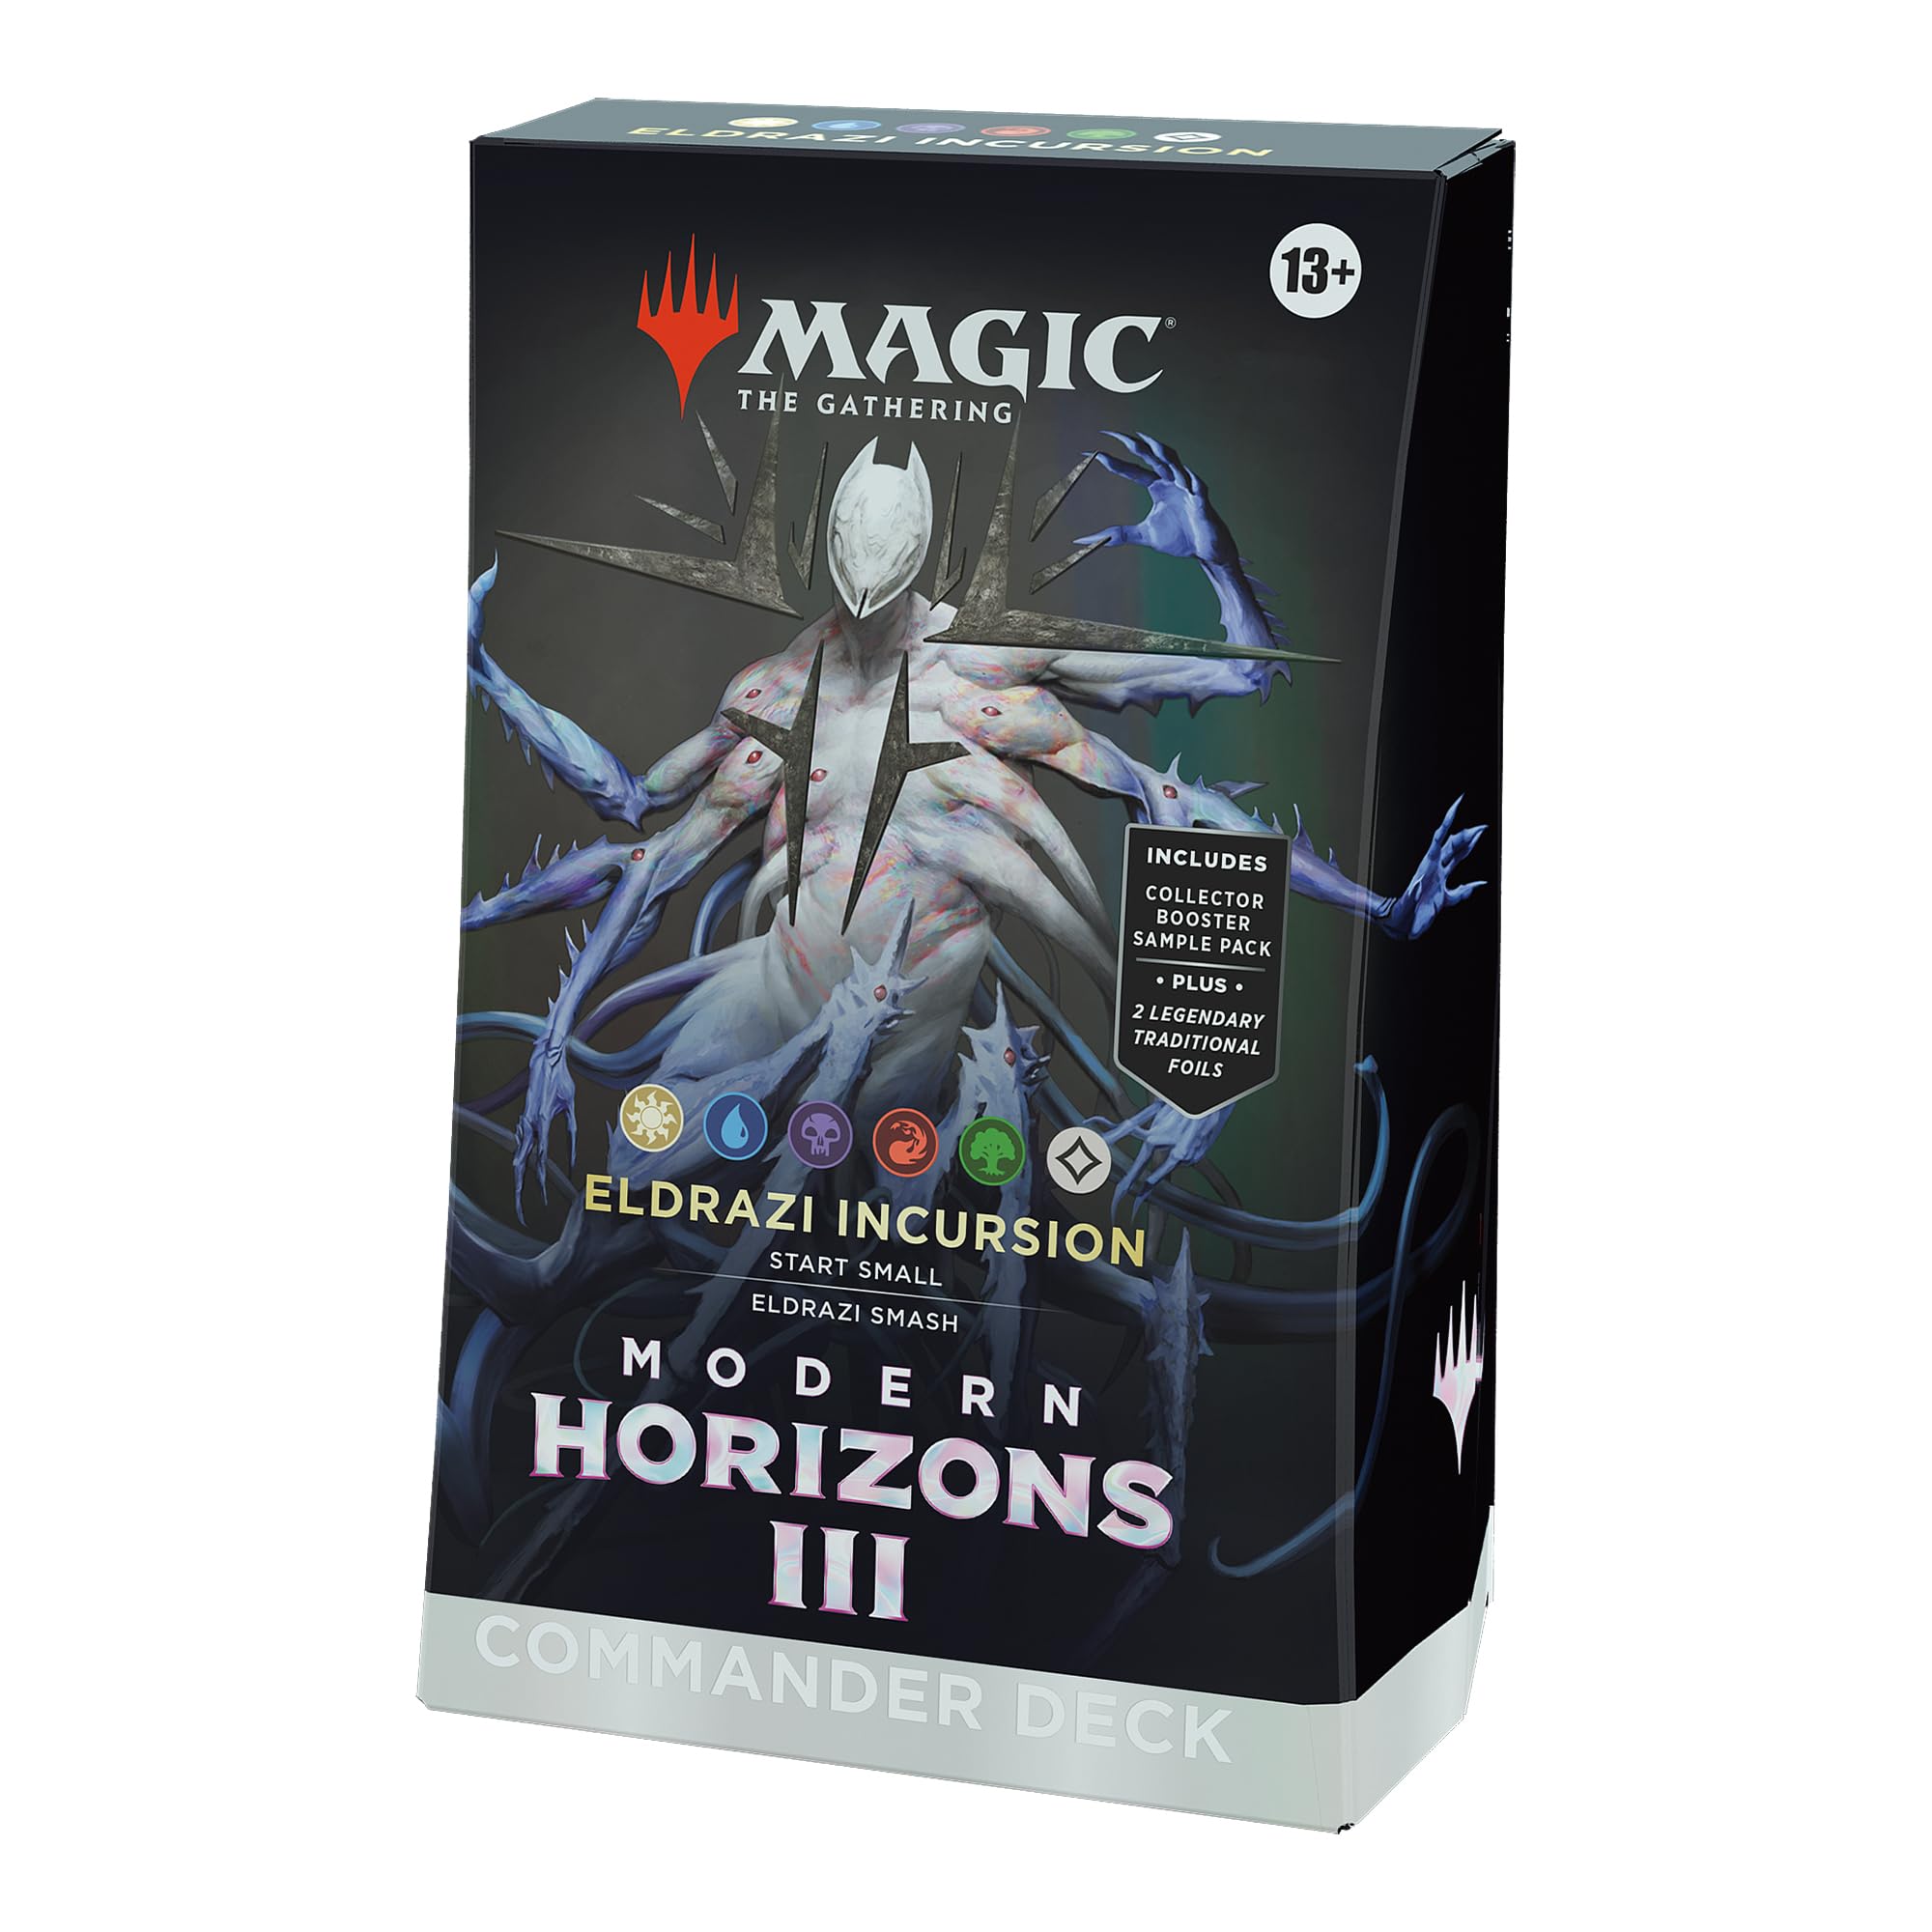 Magic: The Gathering Modern Horizons 3 Commander Deck – Eldrazi Incursion (100-Card Deck, 2-Card Collector Booster Sample Pack + Accessories)